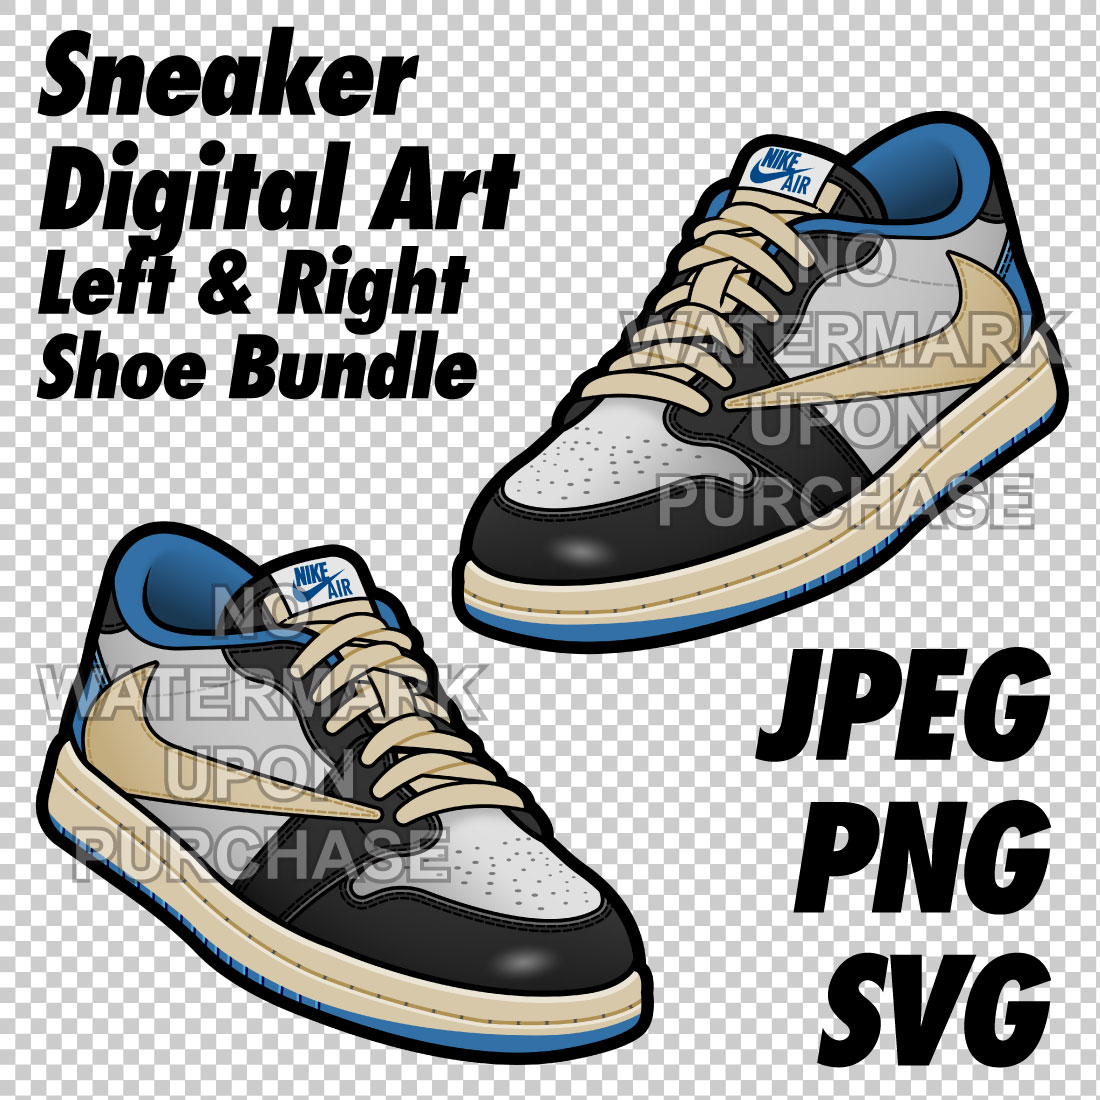 Air Jordan 1 Low Travis Scott x Fragment Design JPEG PNG SVG Sneaker Art Right & Left shoe bundle with lace swap Digital Download preview image.